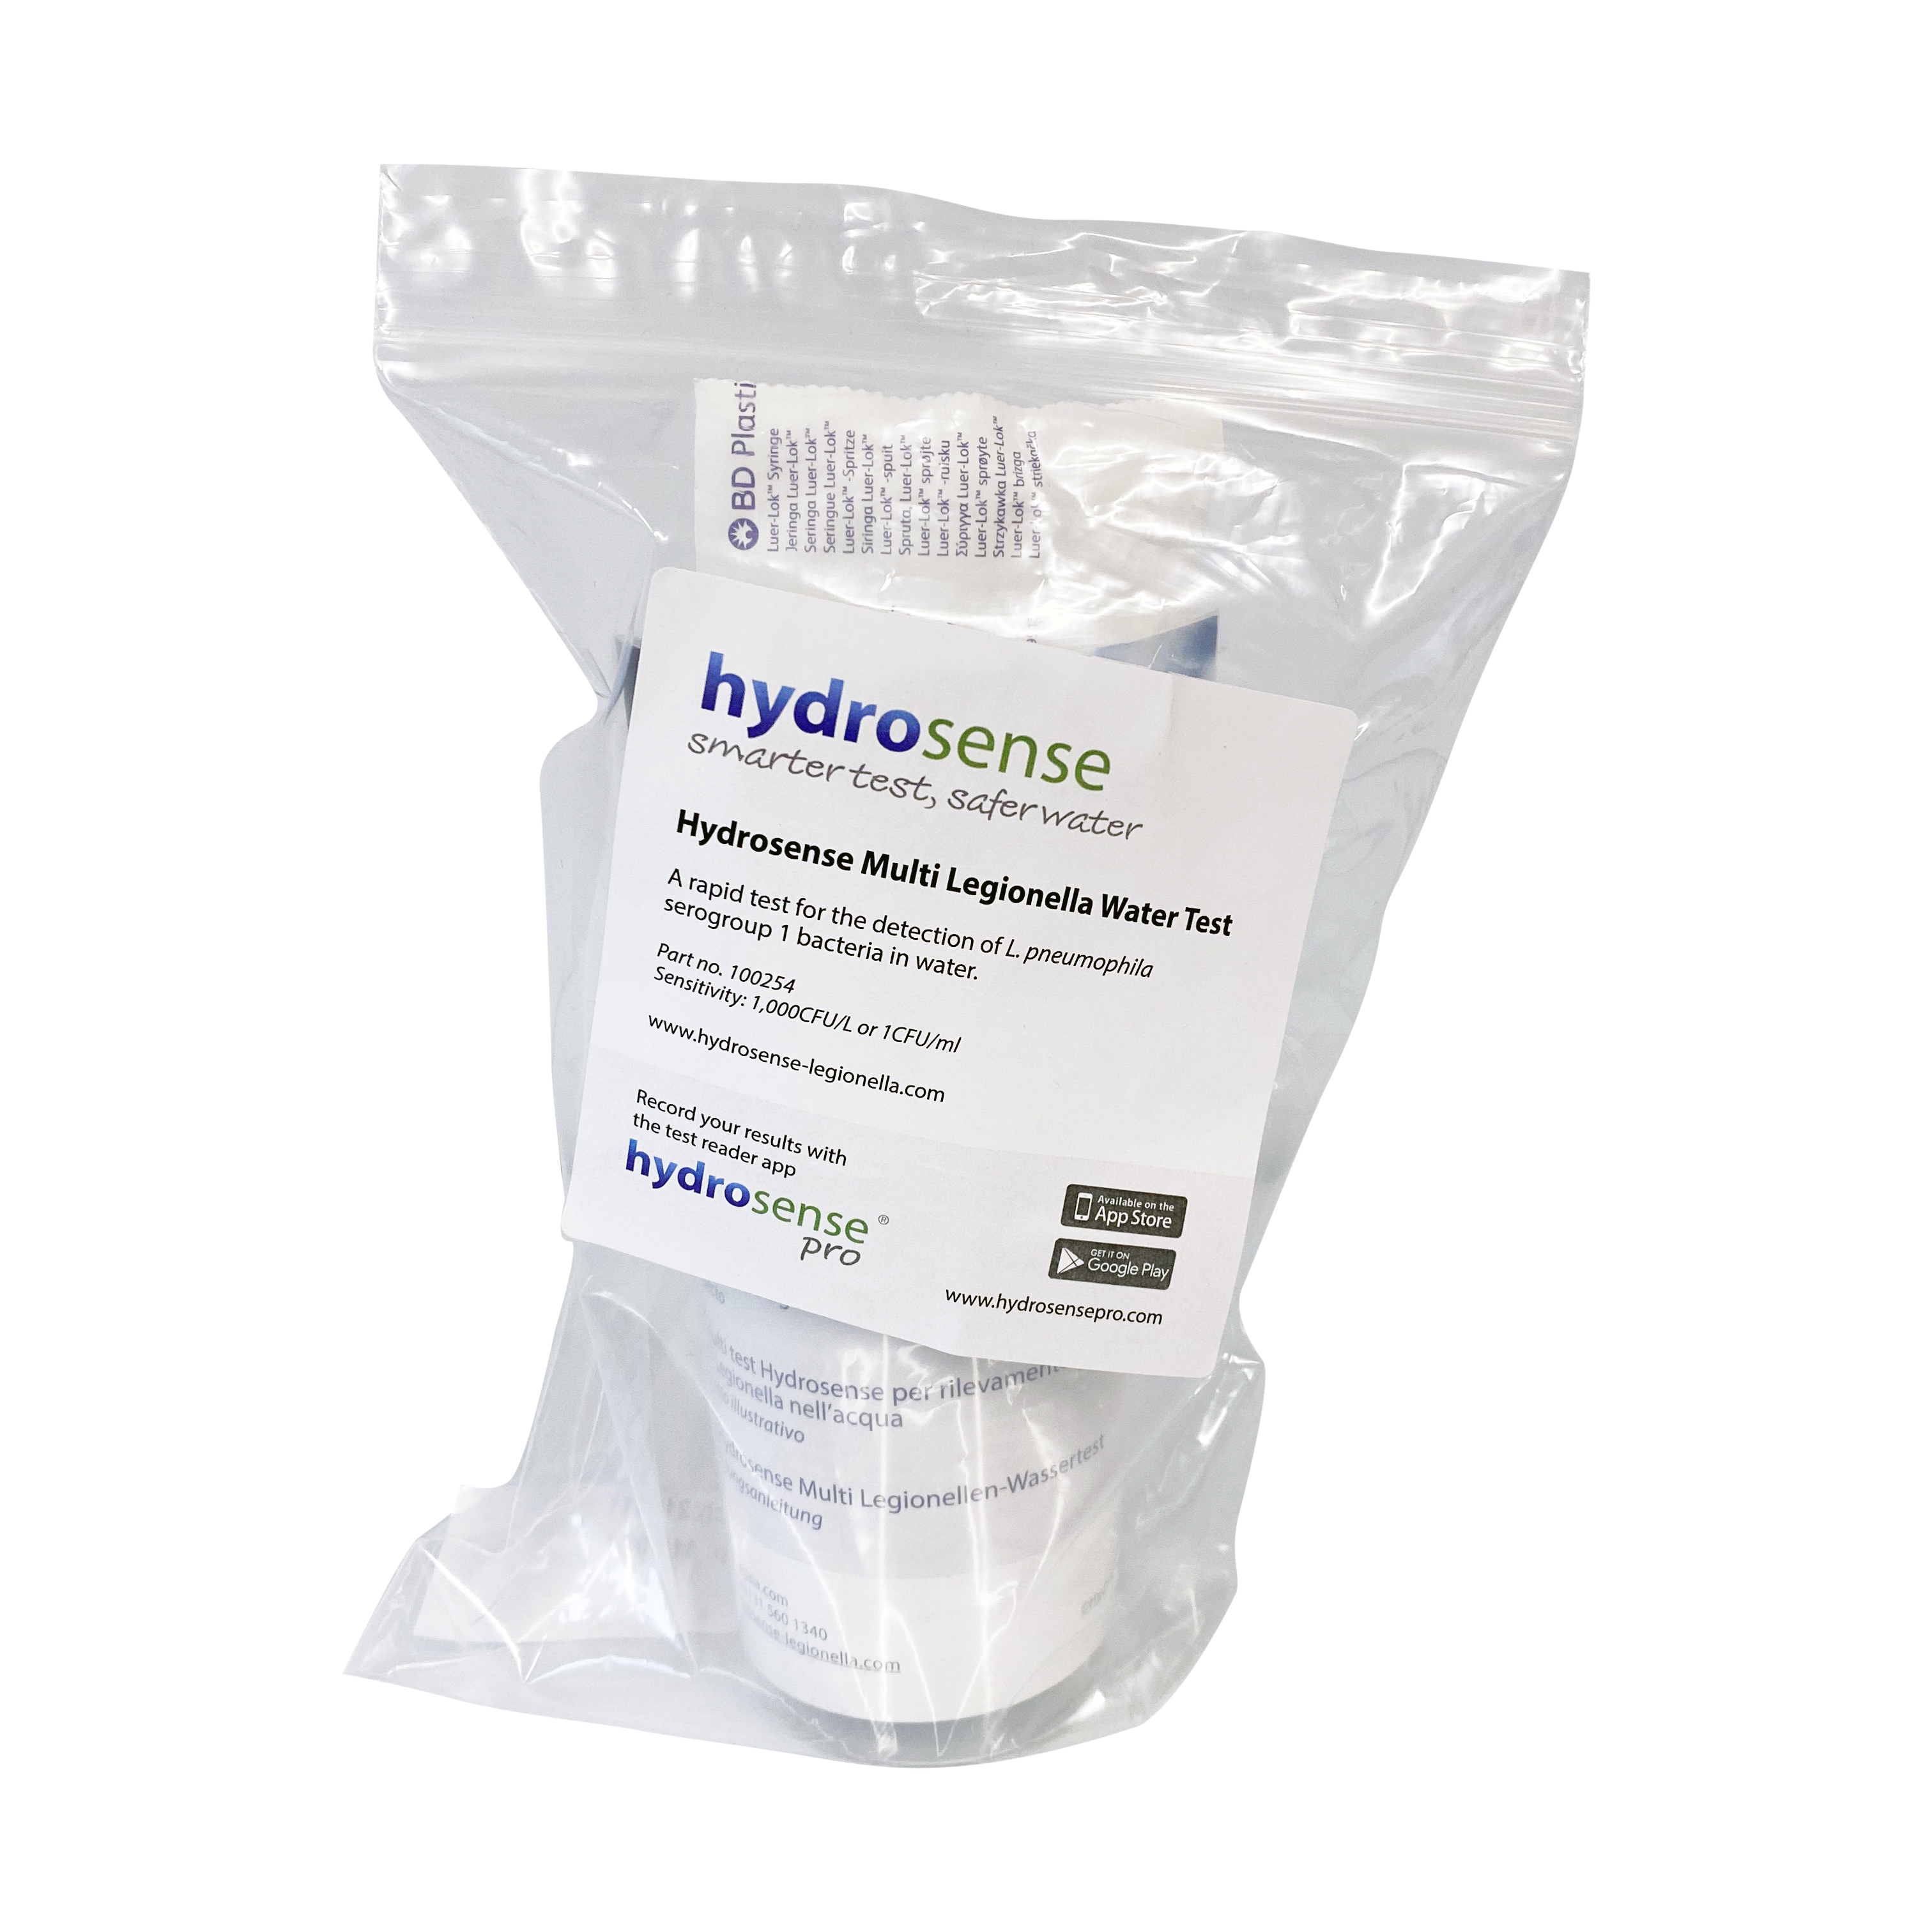 Hydrosense Multi Legionella Water Test White B 2